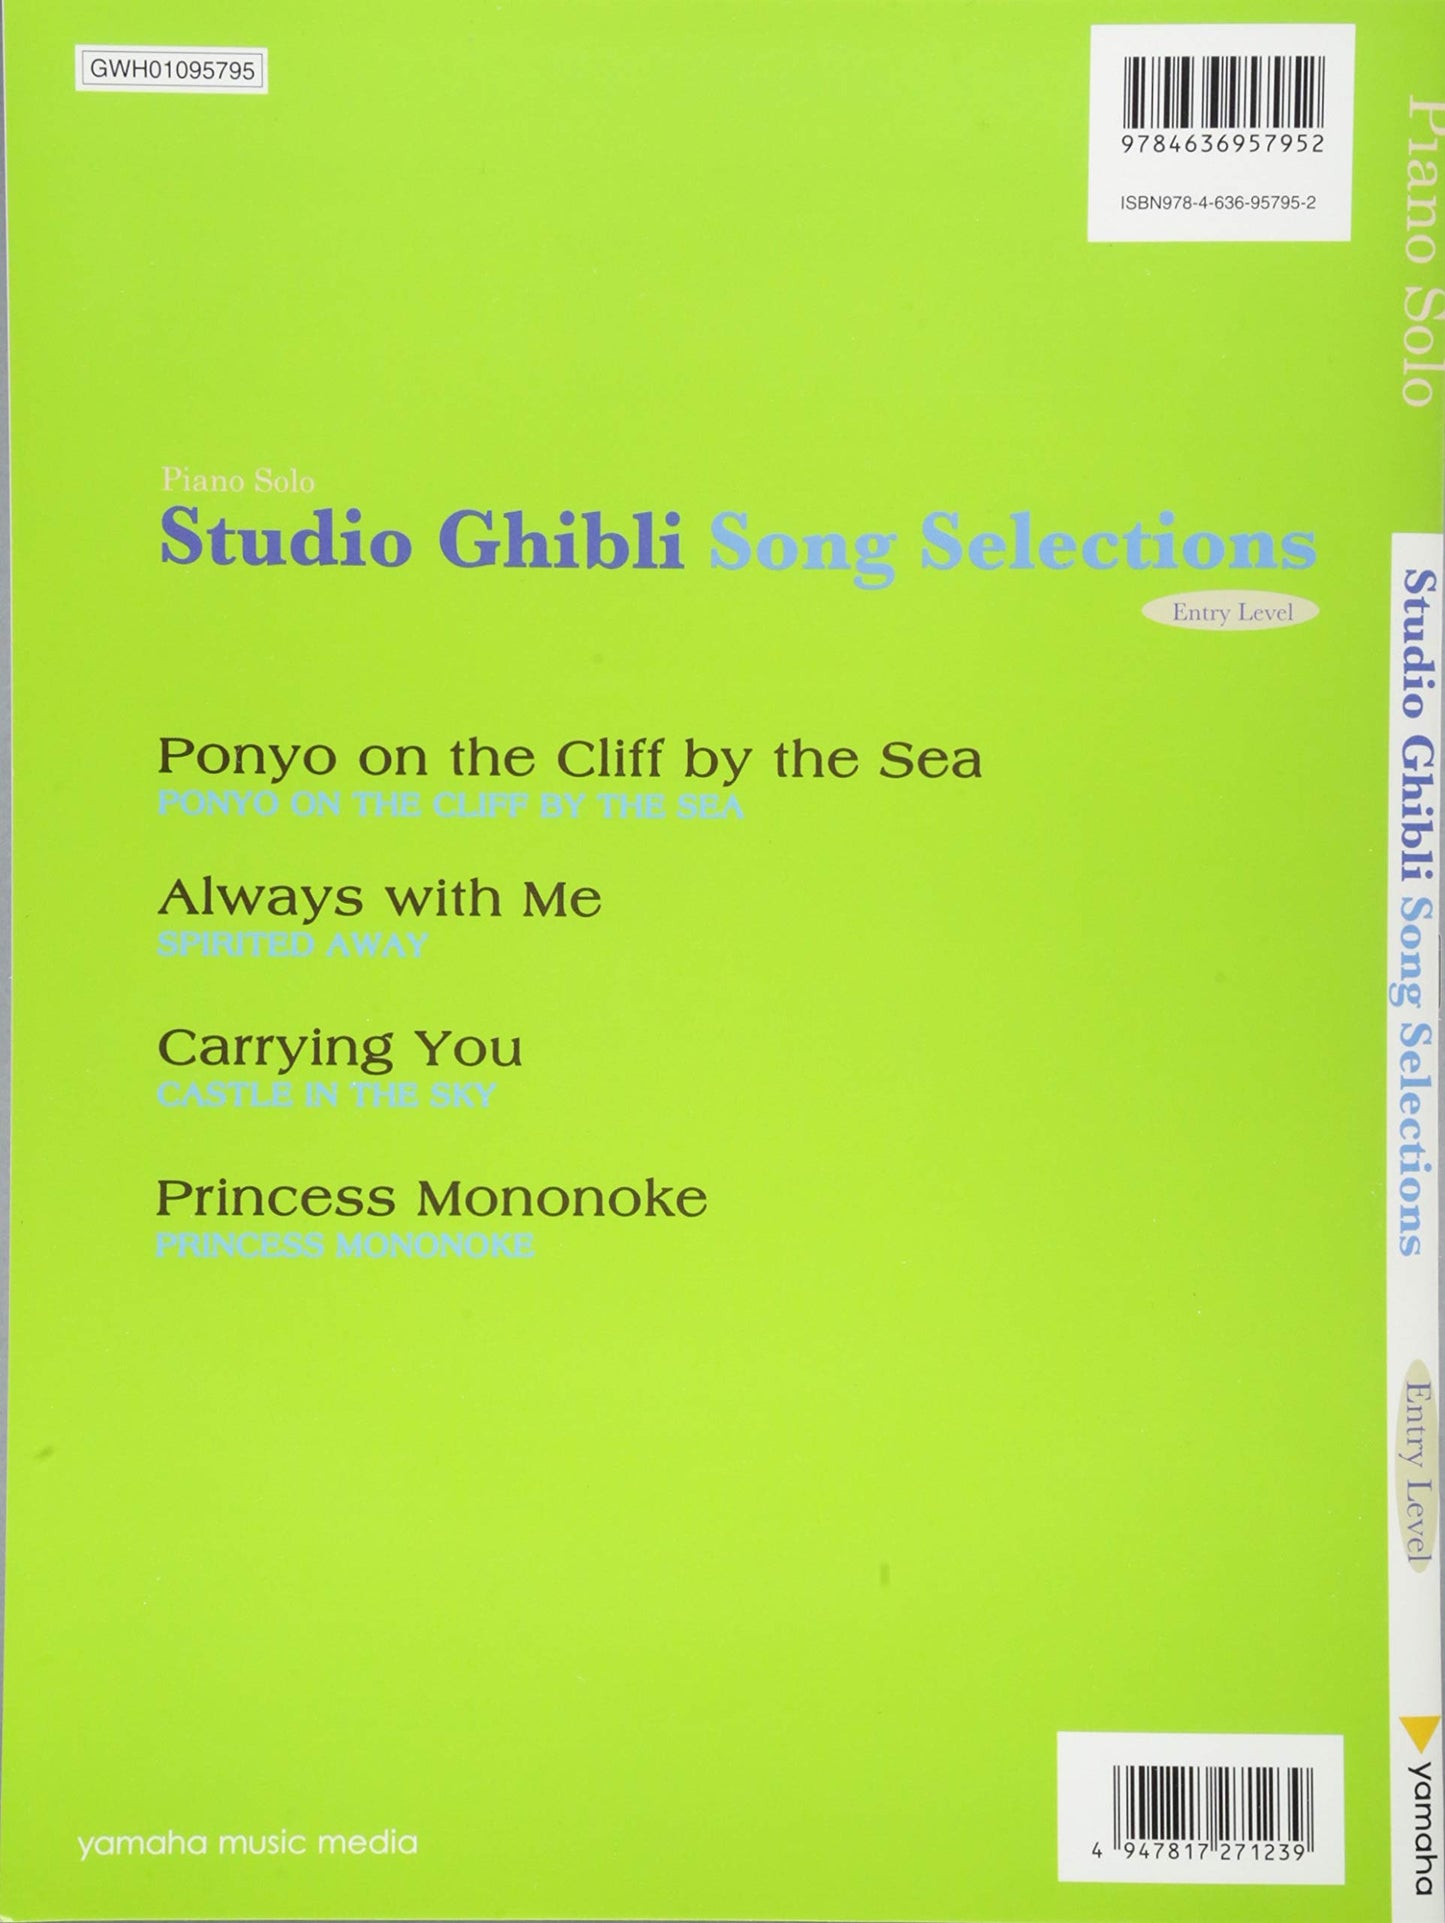 Studio Ghibli Song Piano Solo Selections (Beginner) Sheet Music Book/English Version